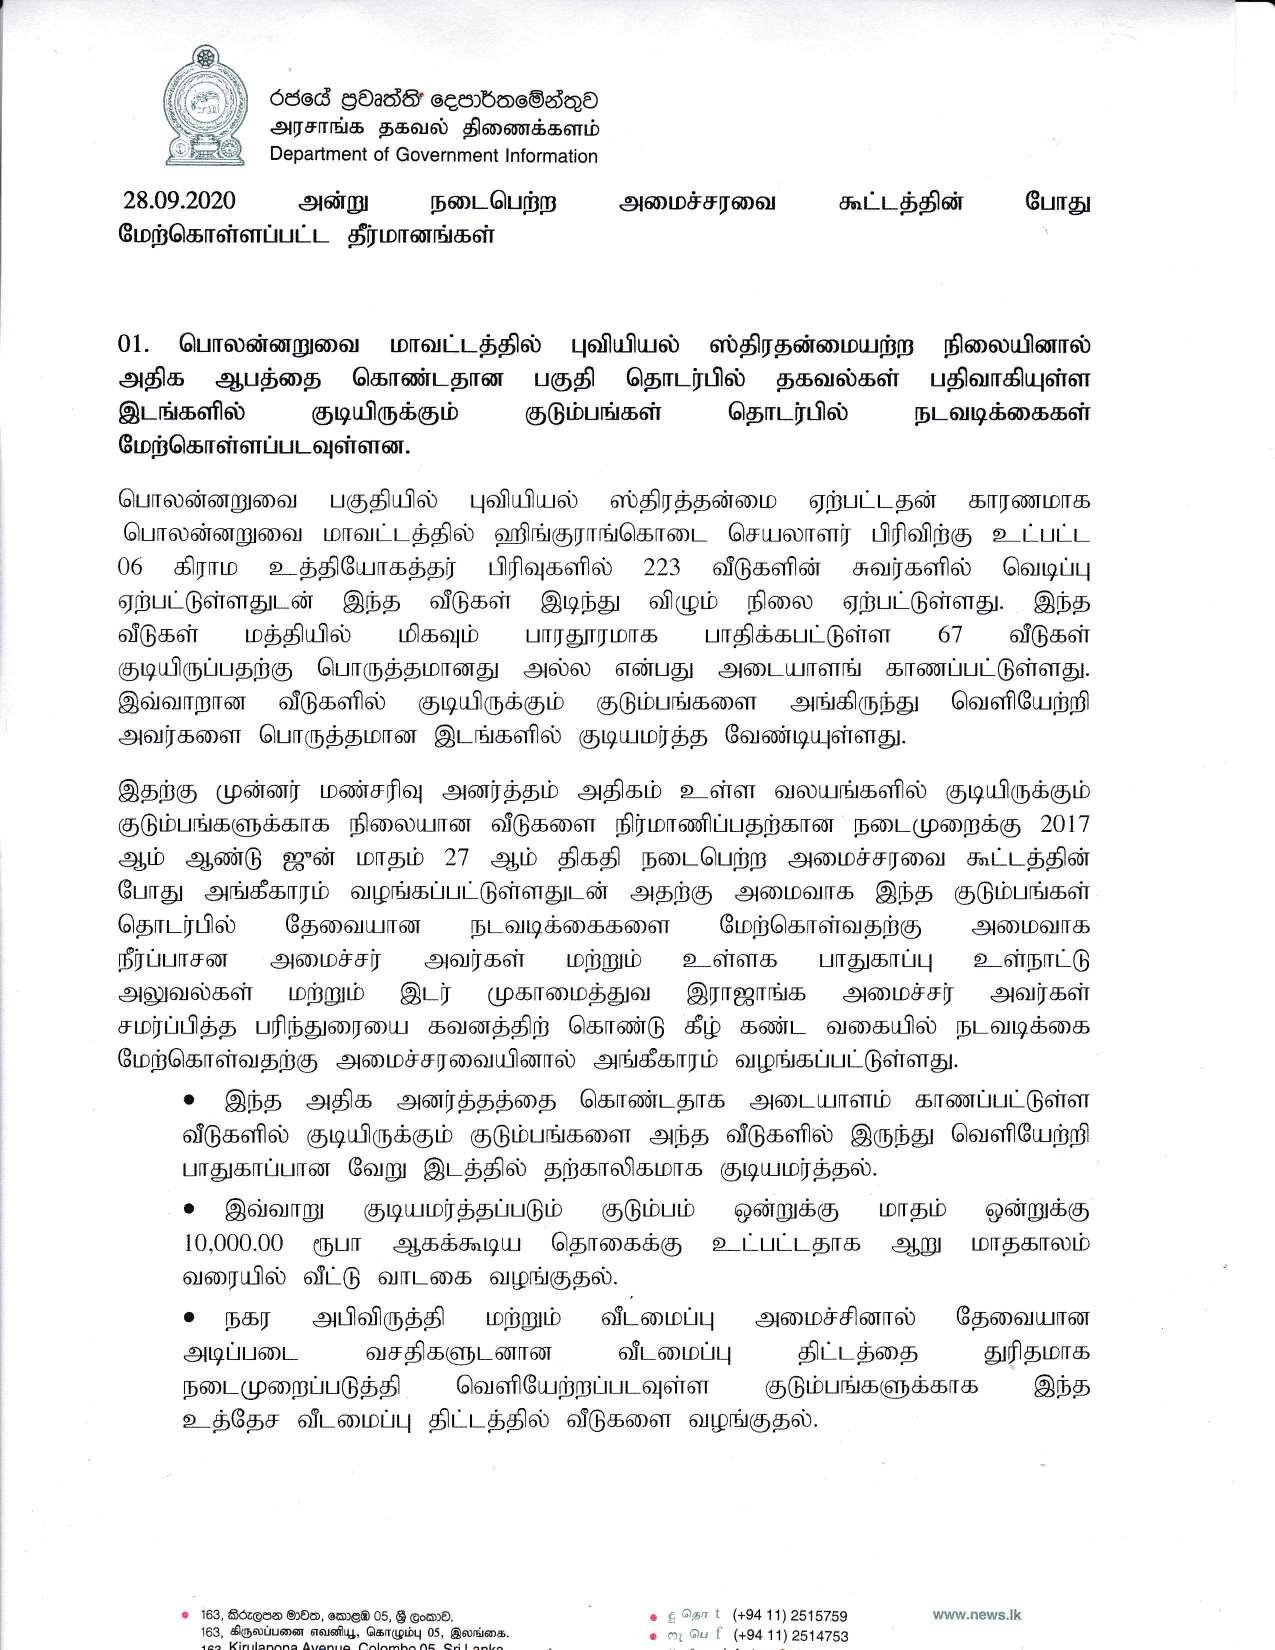 cabinet Desicion on 28.09.2020 Tamil 1 page 001